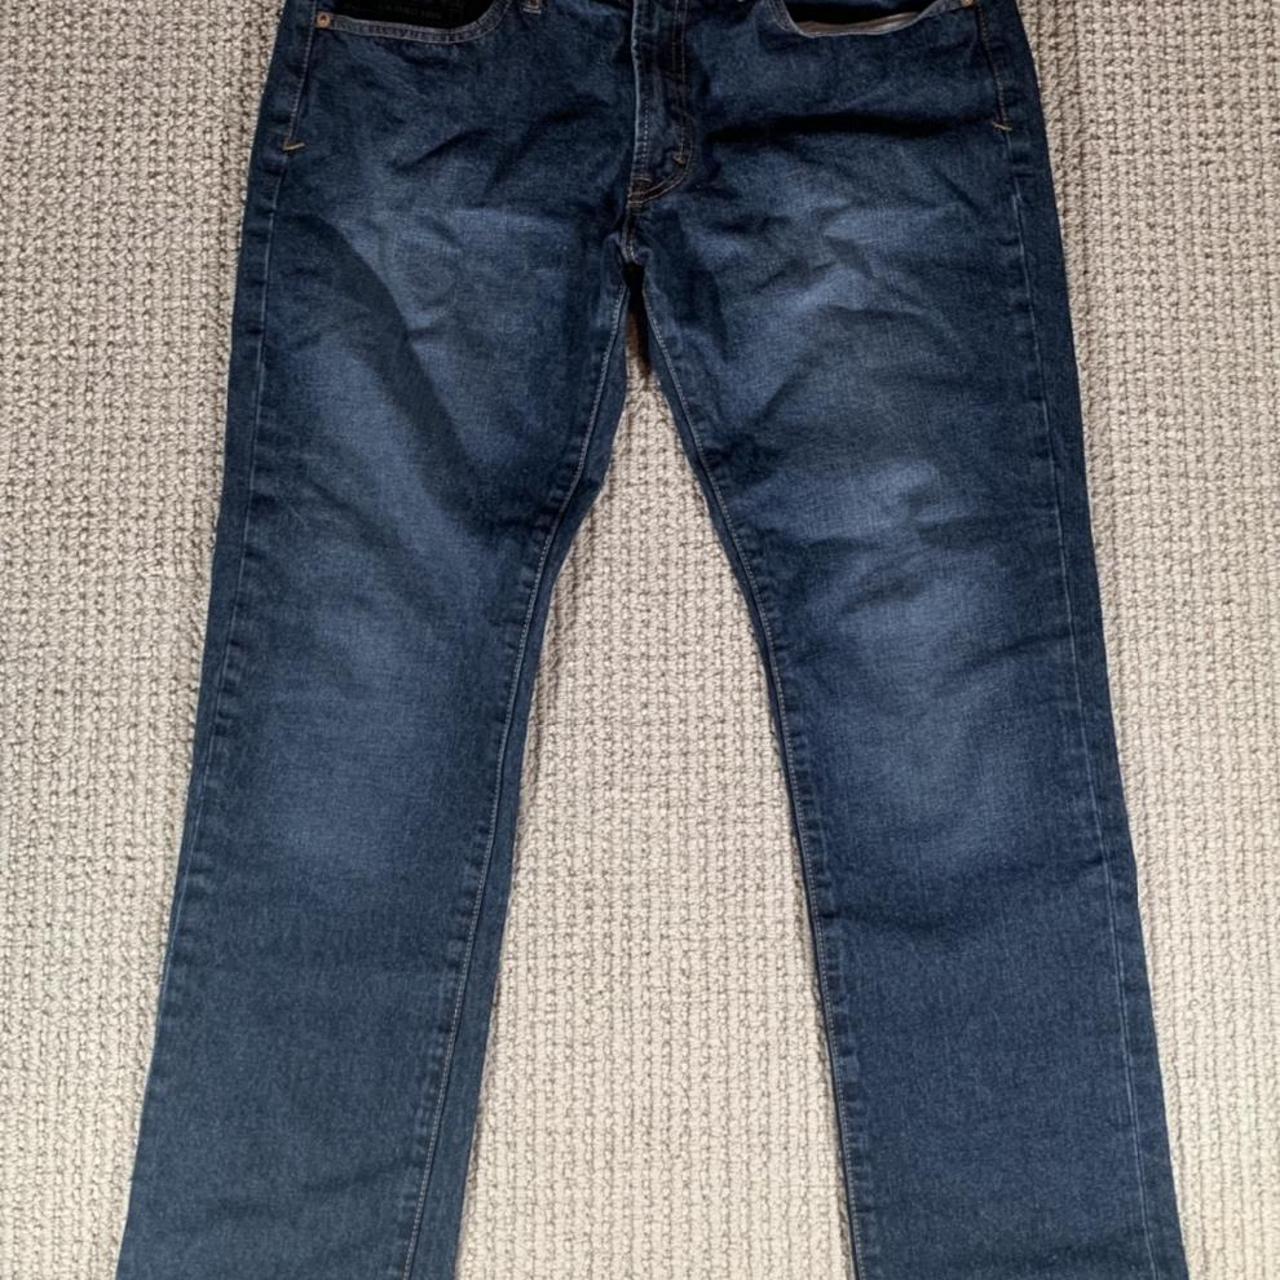 Product Image 1 - Men's US Polo Assn.Blue Jeans